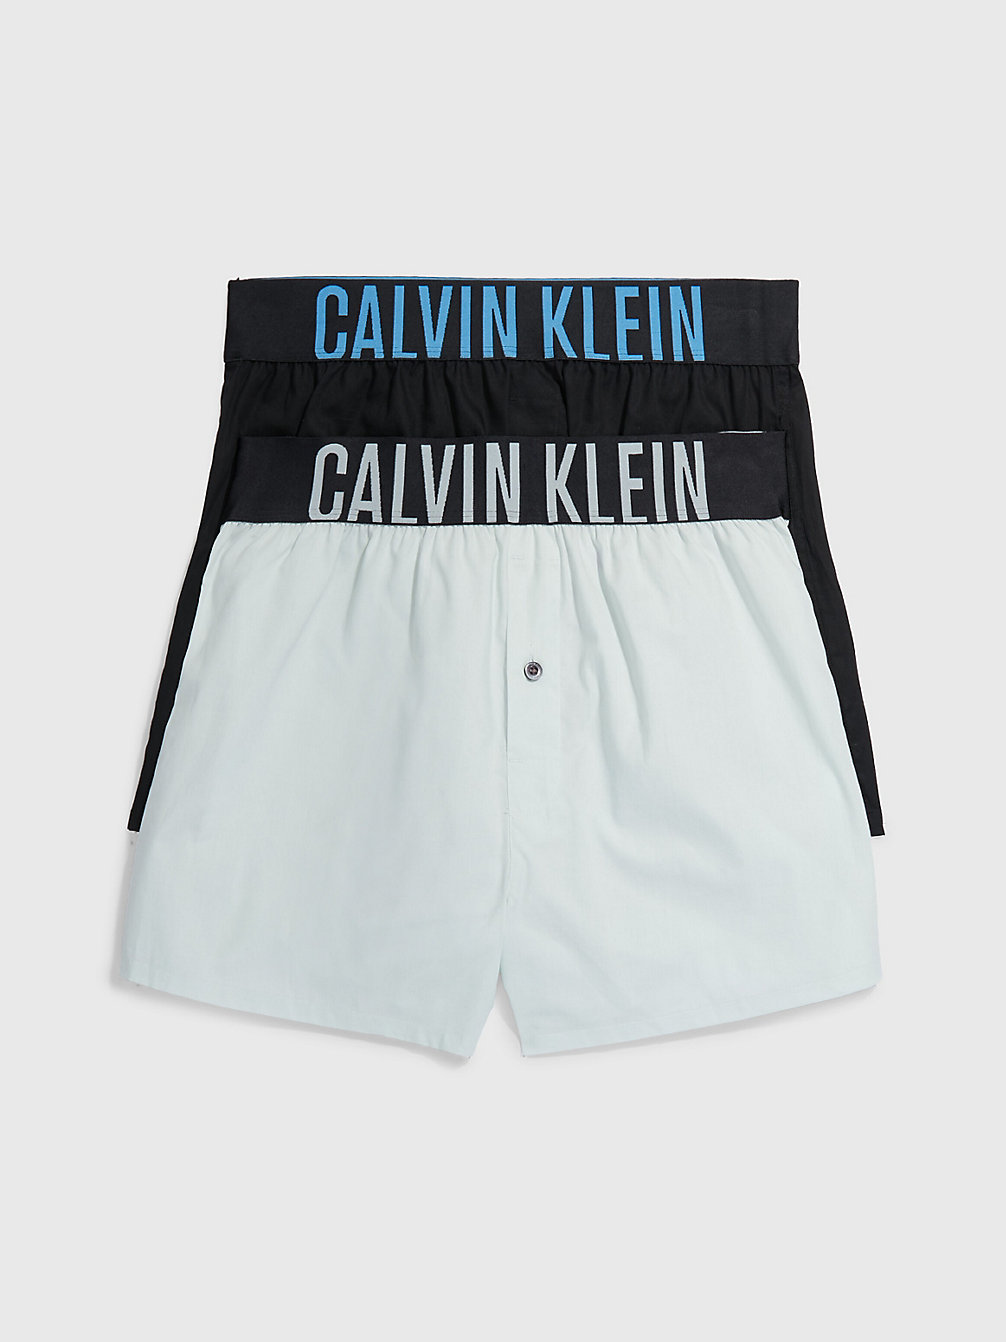 BLACK W/ SIGNATURE BLUE, DRAGON FLY > 2er-Pack Slim Fit-Boxershorts - Intense Power > undefined Herren - Calvin Klein